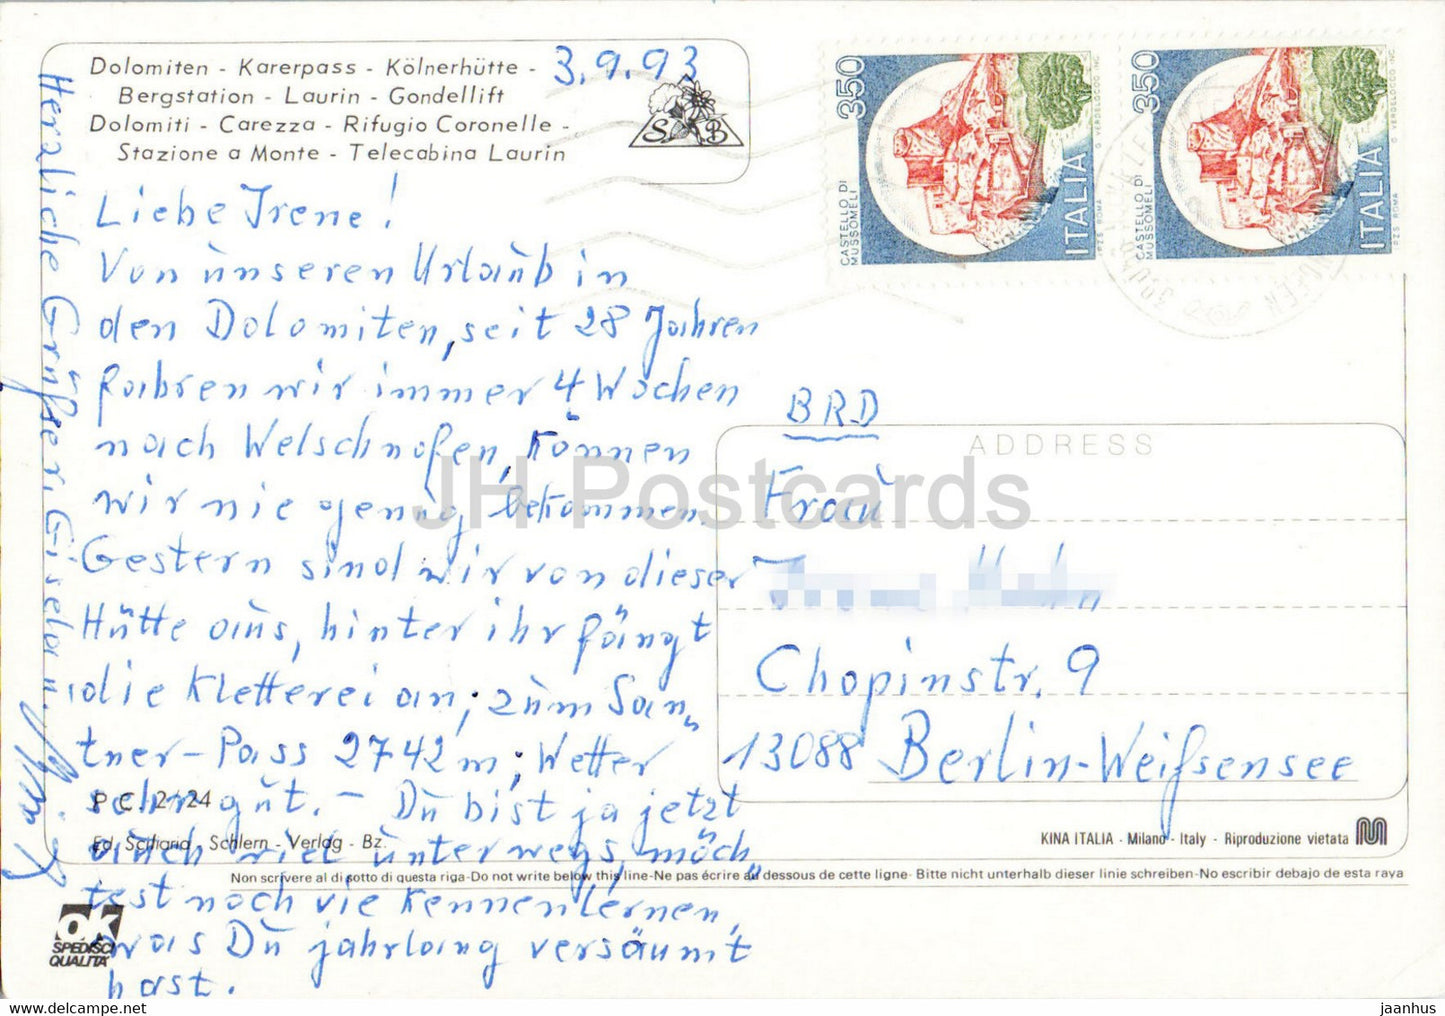 Dolomiten - Karerpass - Kolnerhutte - Bergstation - Gondellift - Carezza - Rifugio Coronelle - 1993 - Italy - used